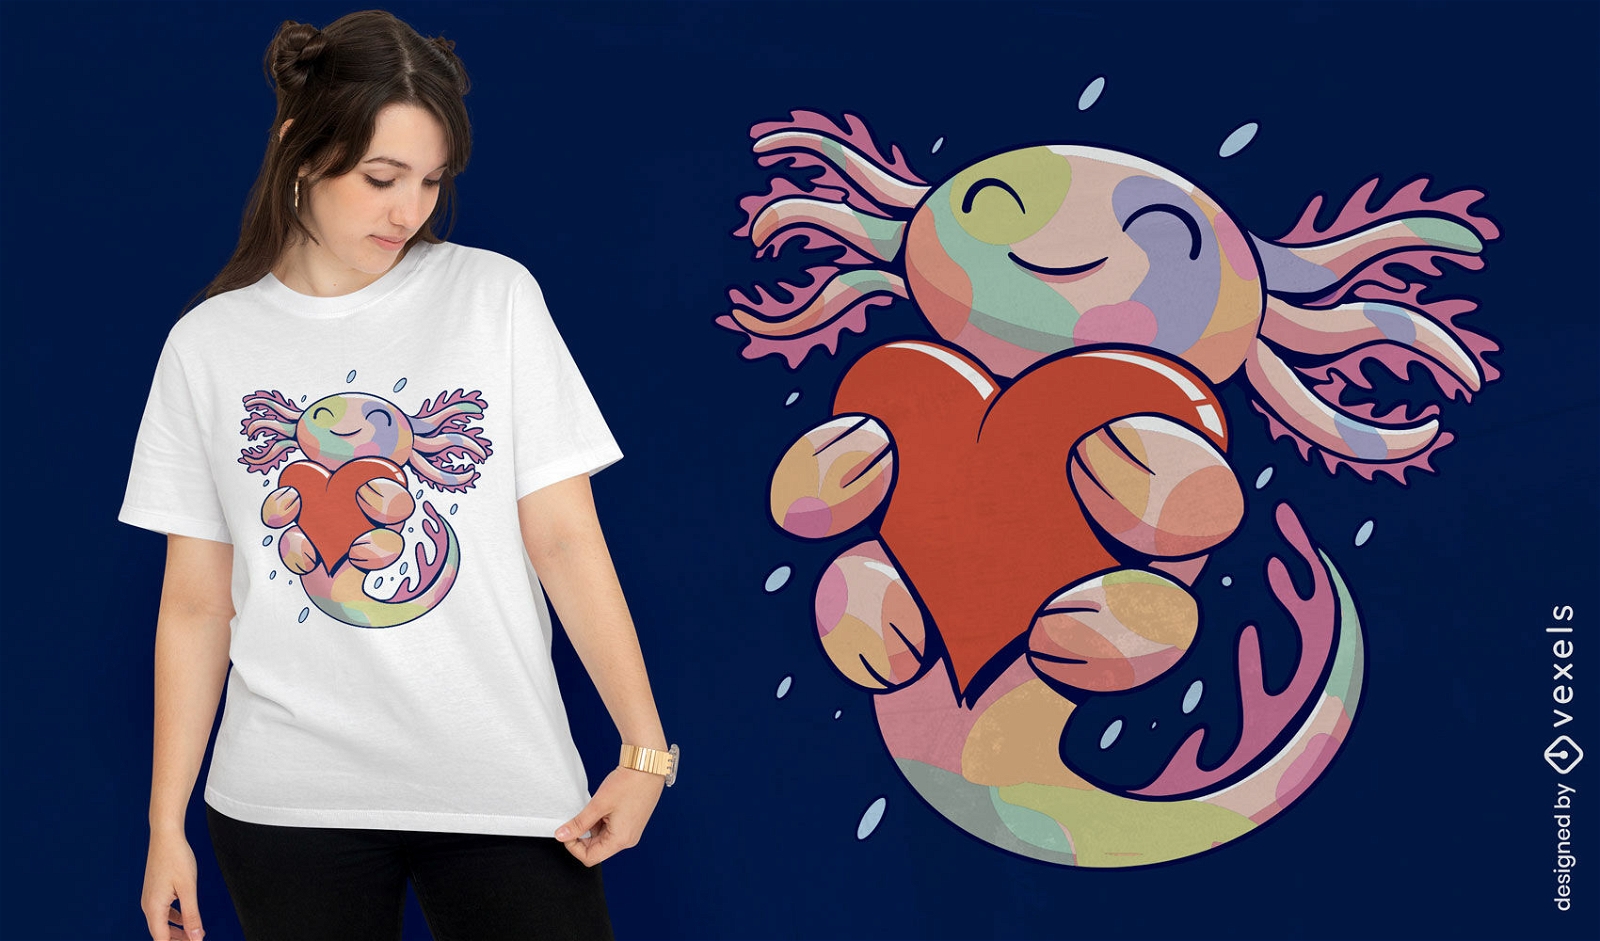 Dreamy axolotl t-shirt design